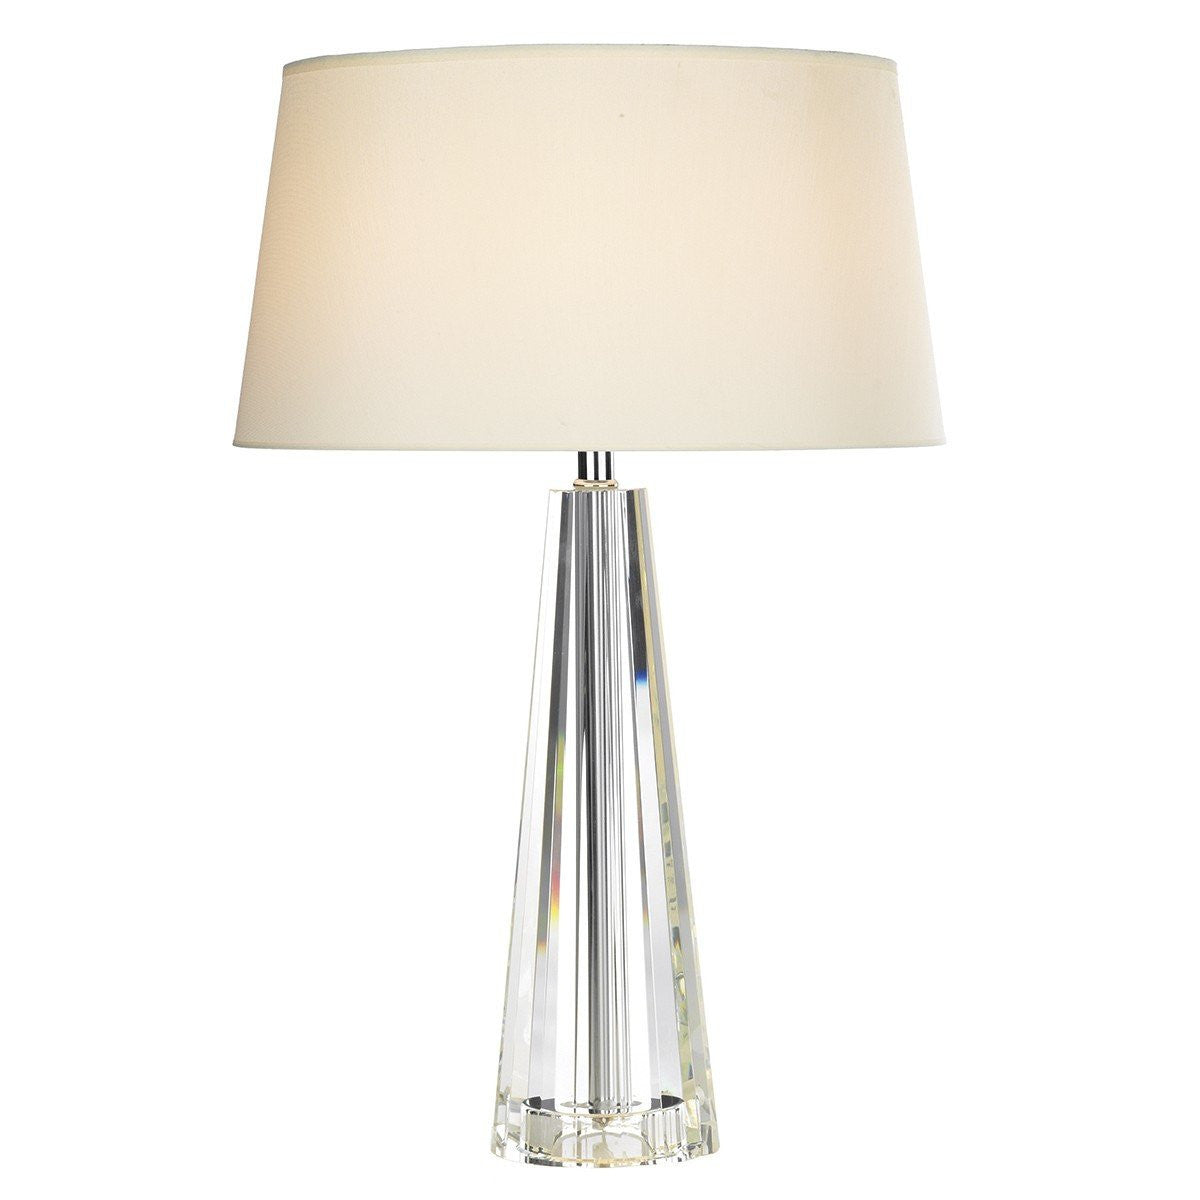 Cyprus Cream Table Lamp - London Lighting - 1